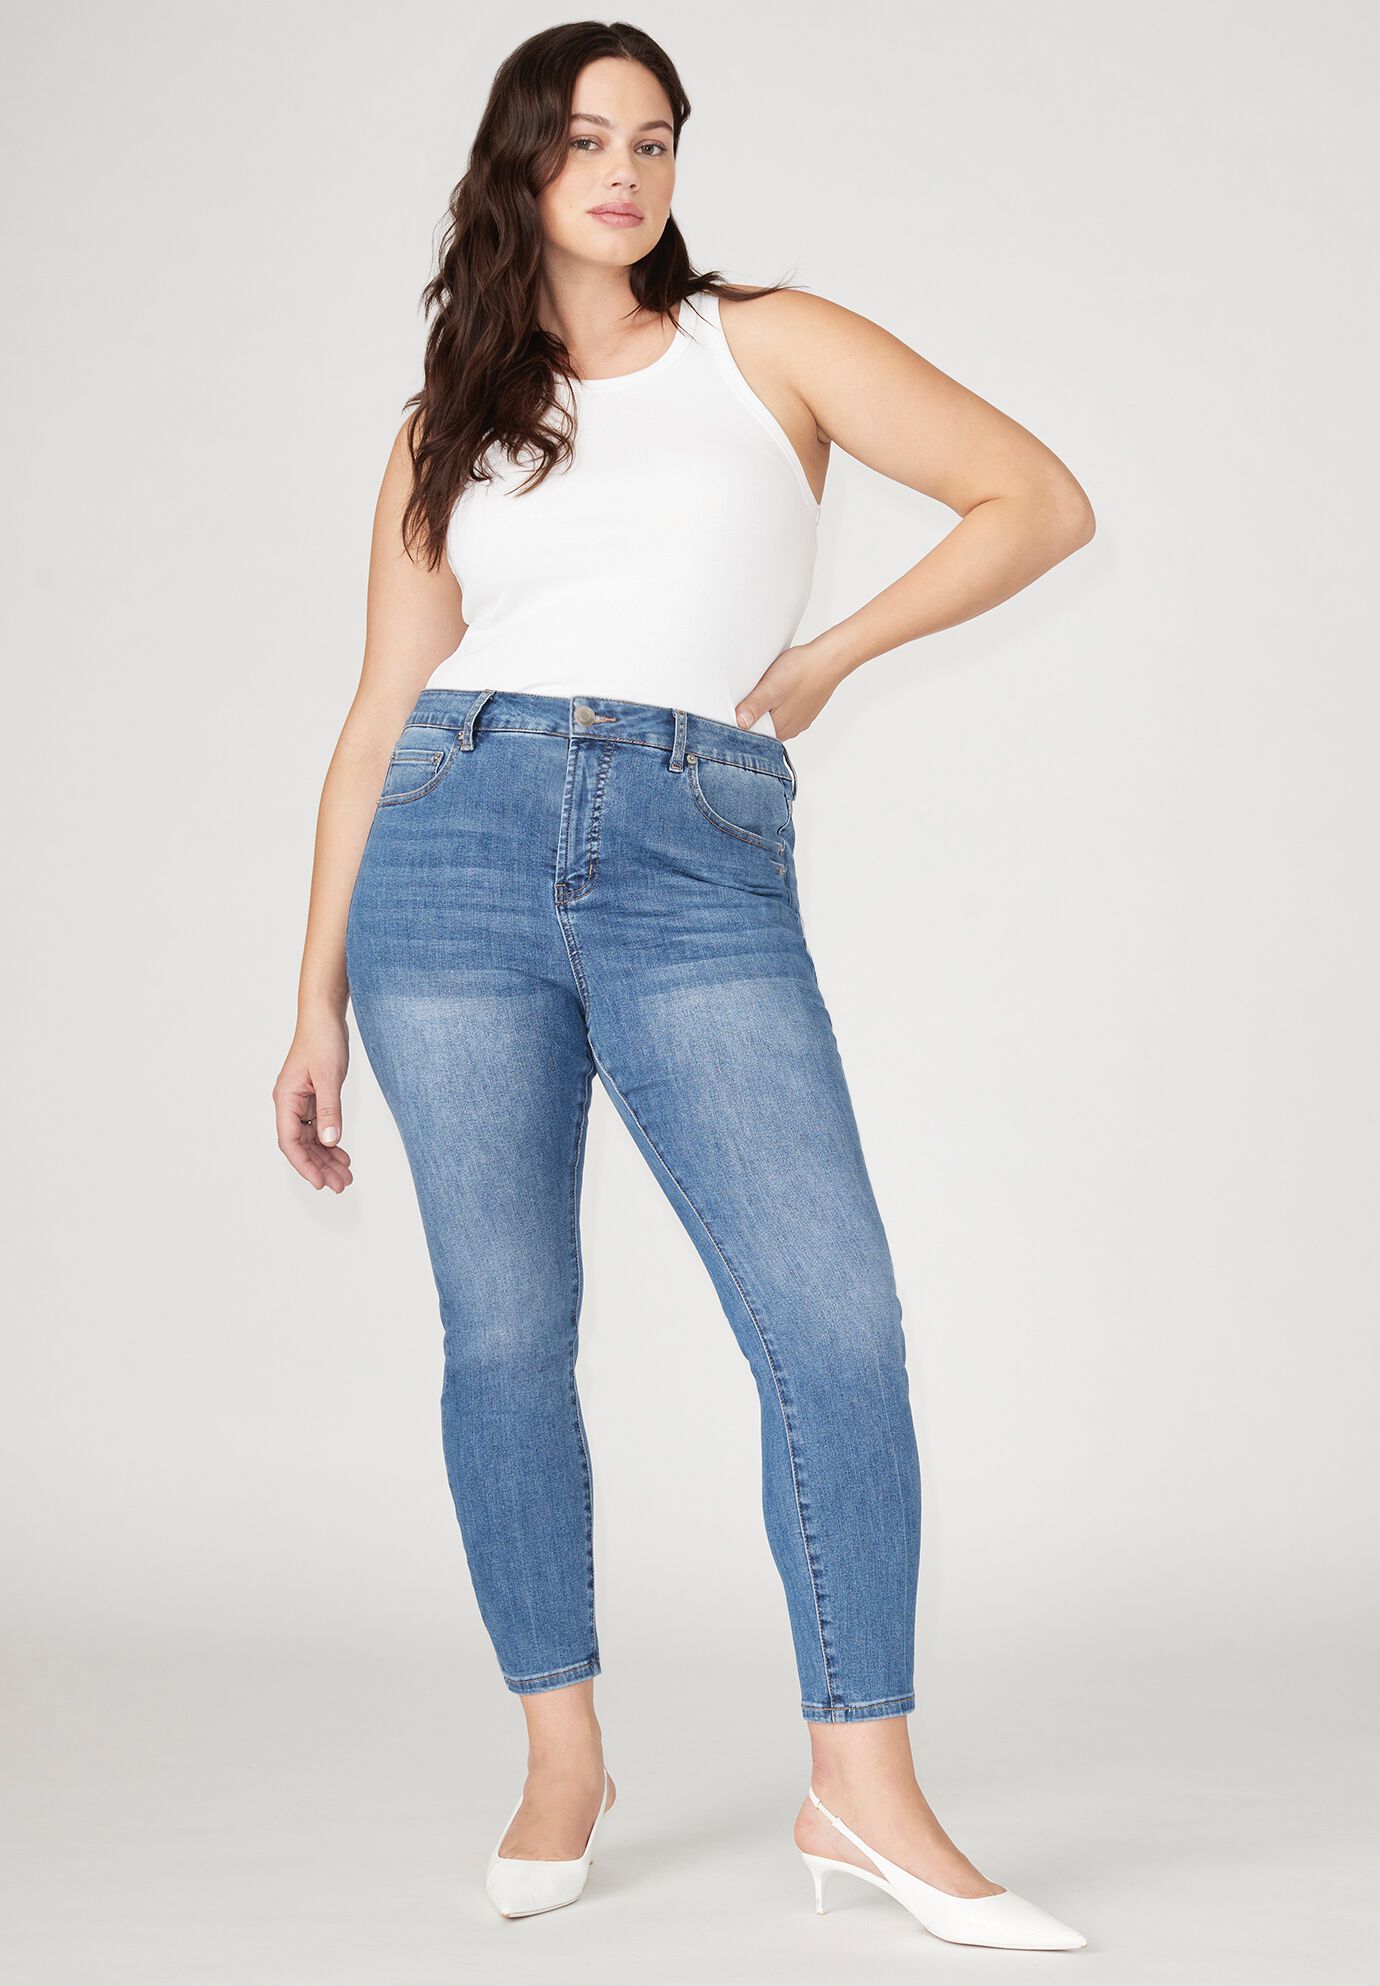 Plus Size Women The Morgan Super Stretch Skinny Jean By ( Size 26 )